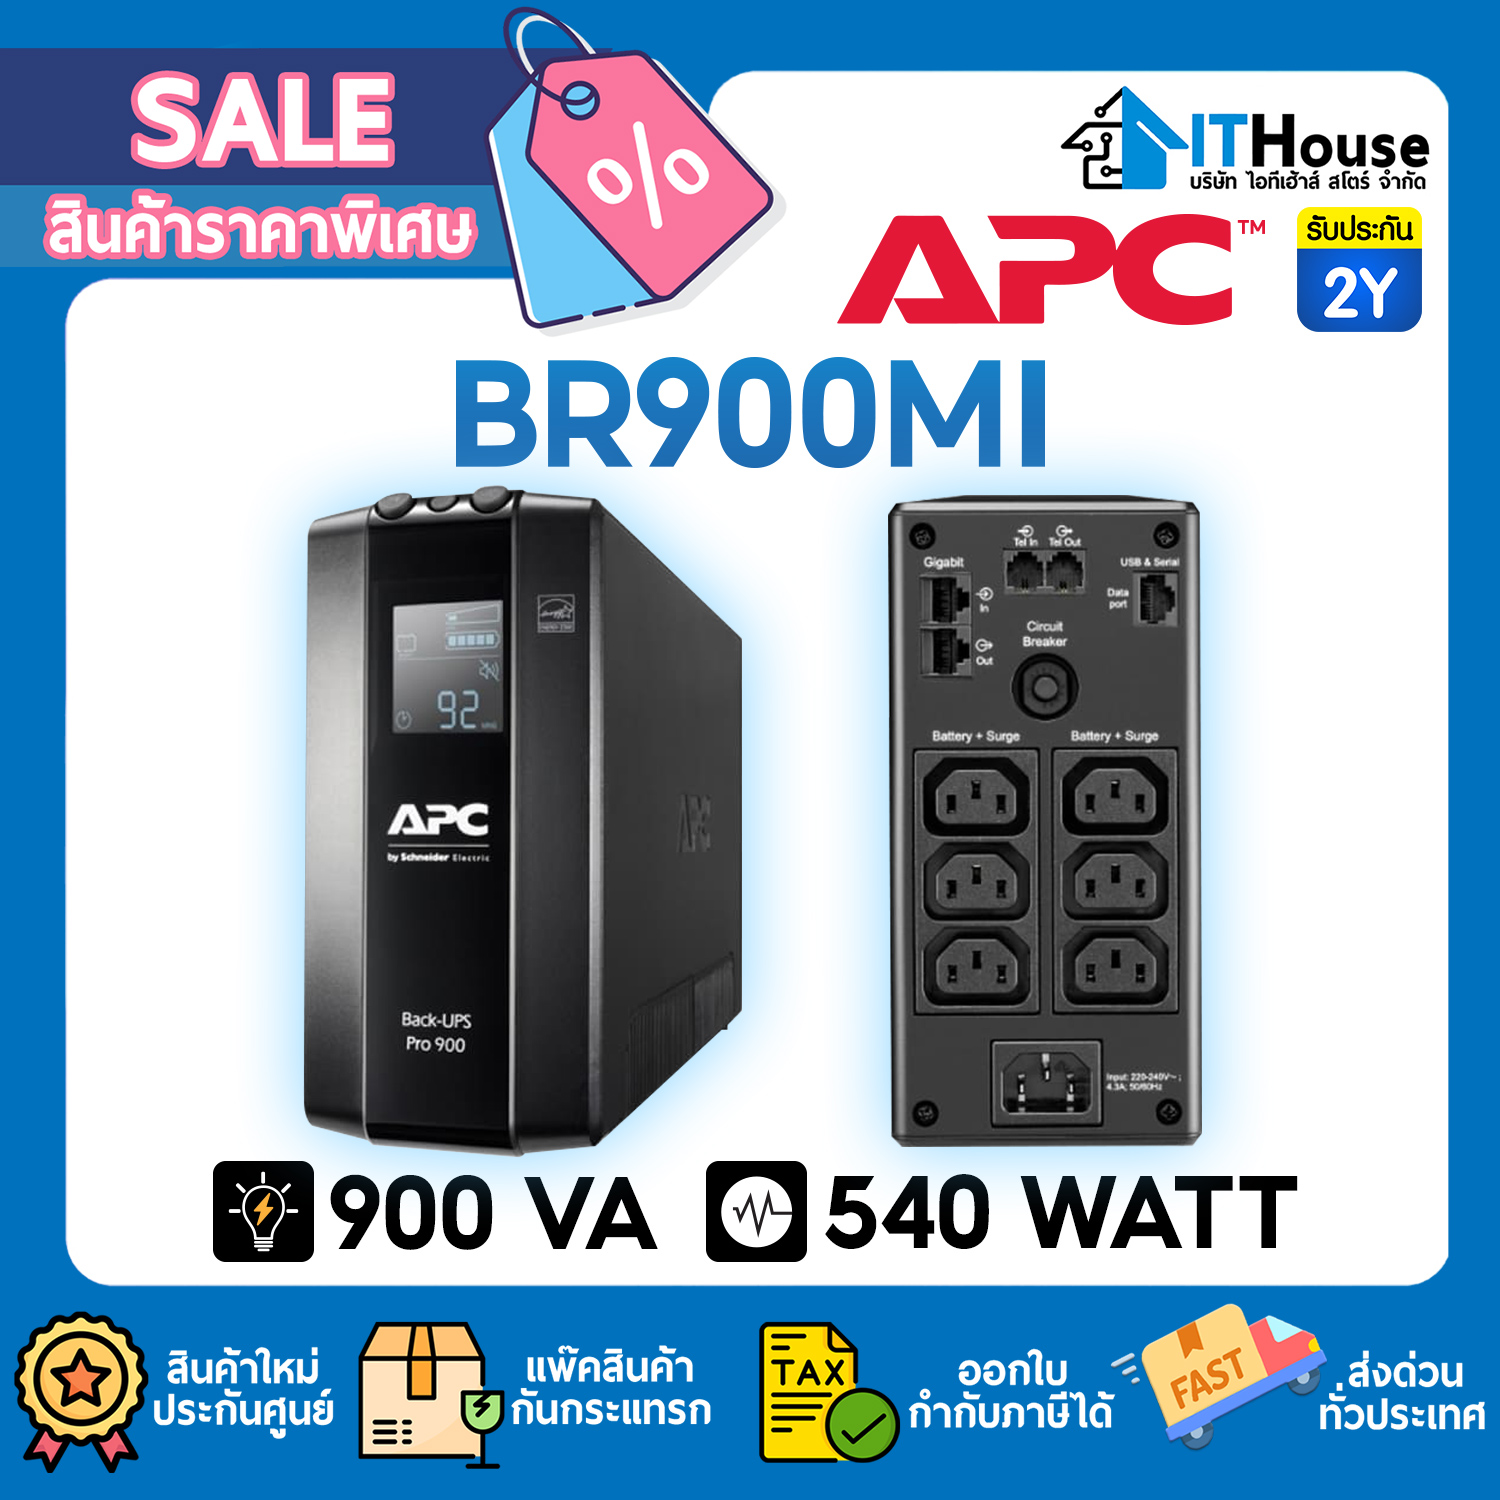 APC BR900MI (900 VA/540 WATT)